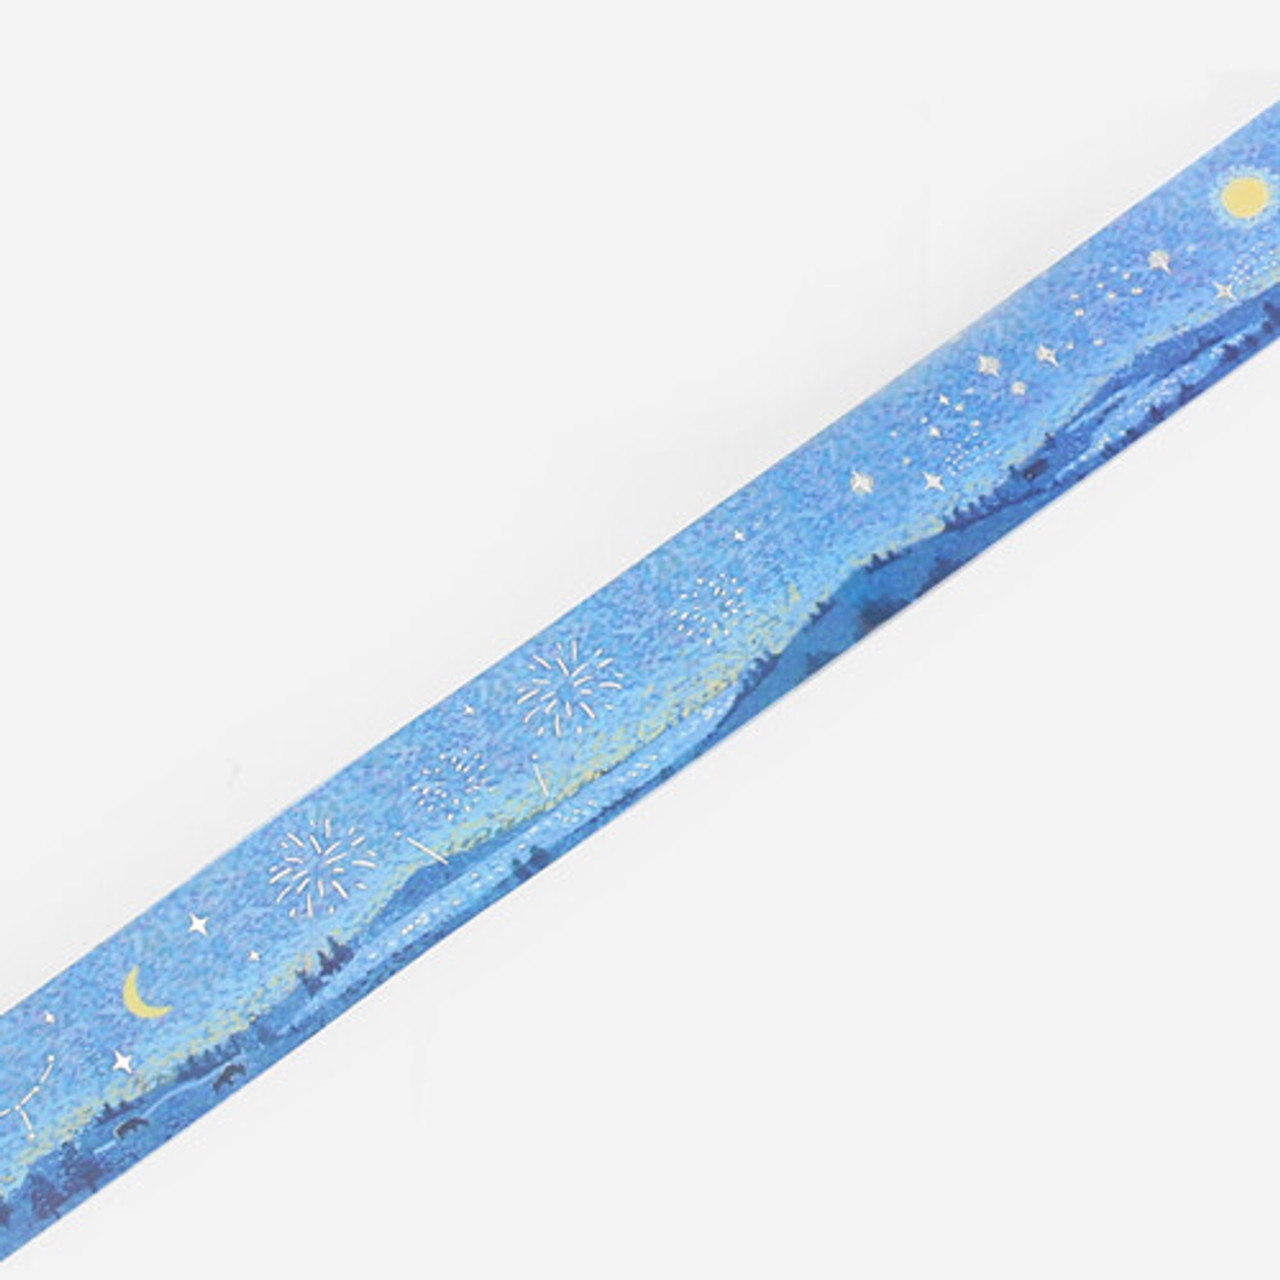 BGM Twinkle Star Washi Tape Gold Foil Masking Tape Blue 20mm x 5m